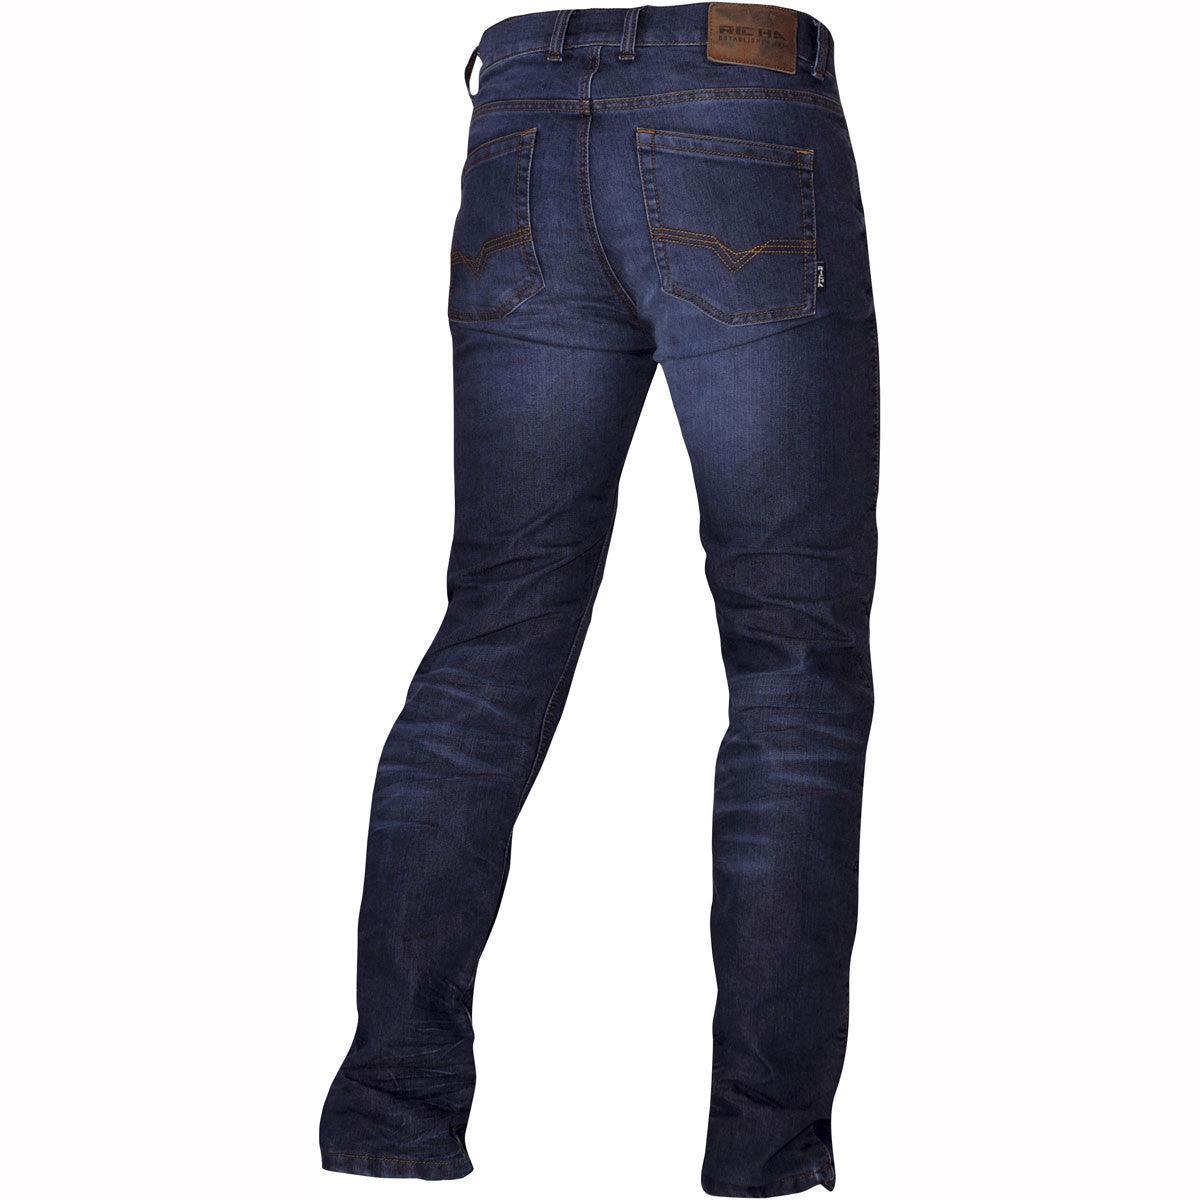 Richa Original Straight Cut Jeans 32in Leg CE Blue - Armoured Jeans